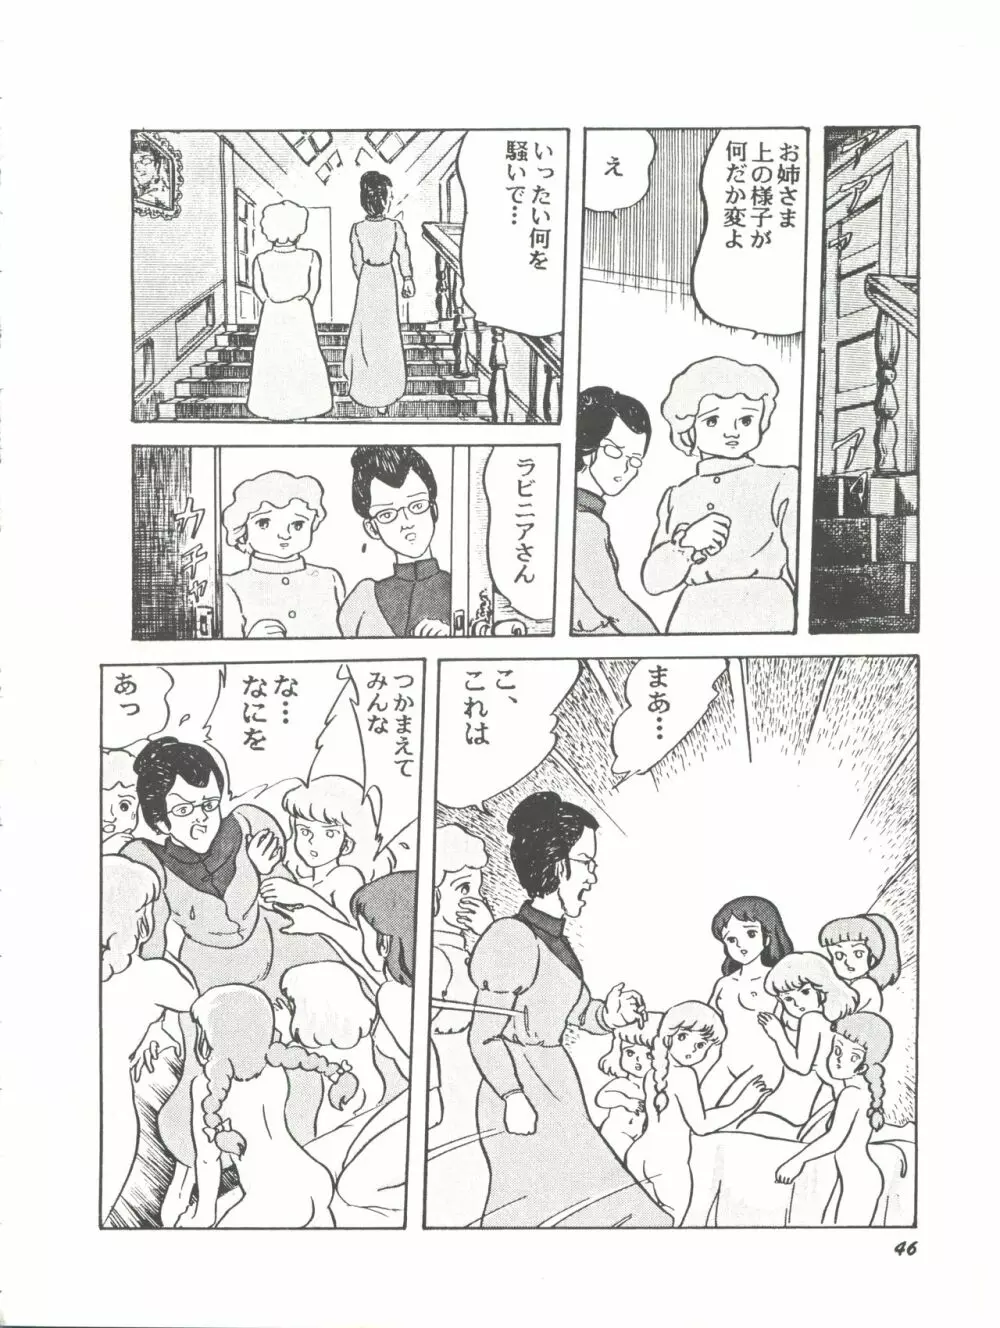 Paろでぃっく2 改訂版 - page46